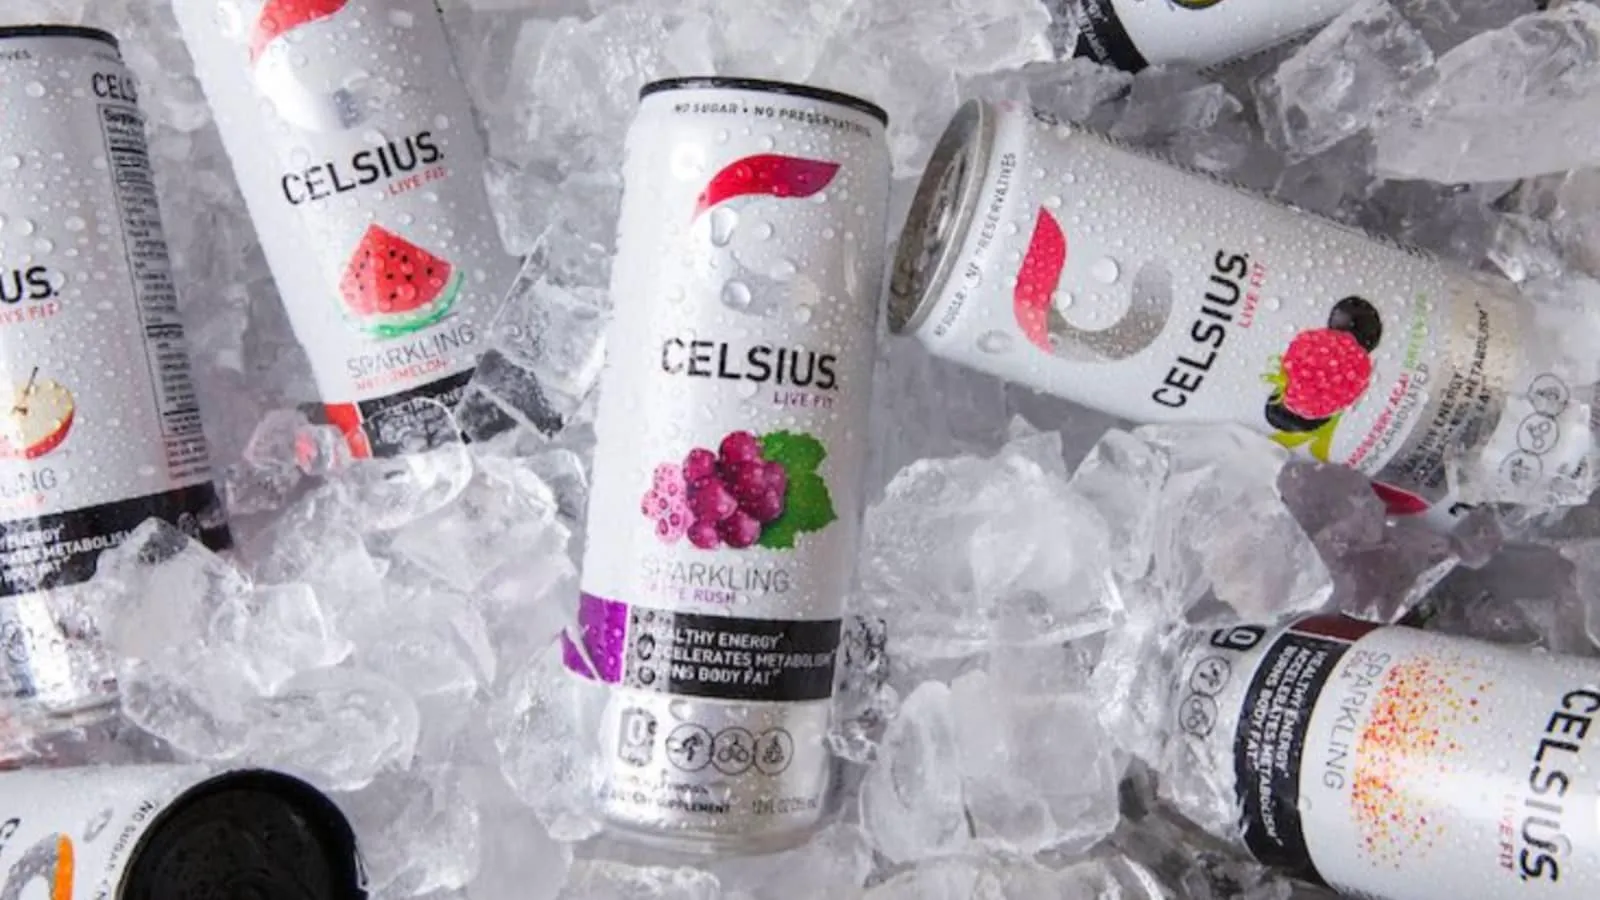 Celsius Energy Drinks